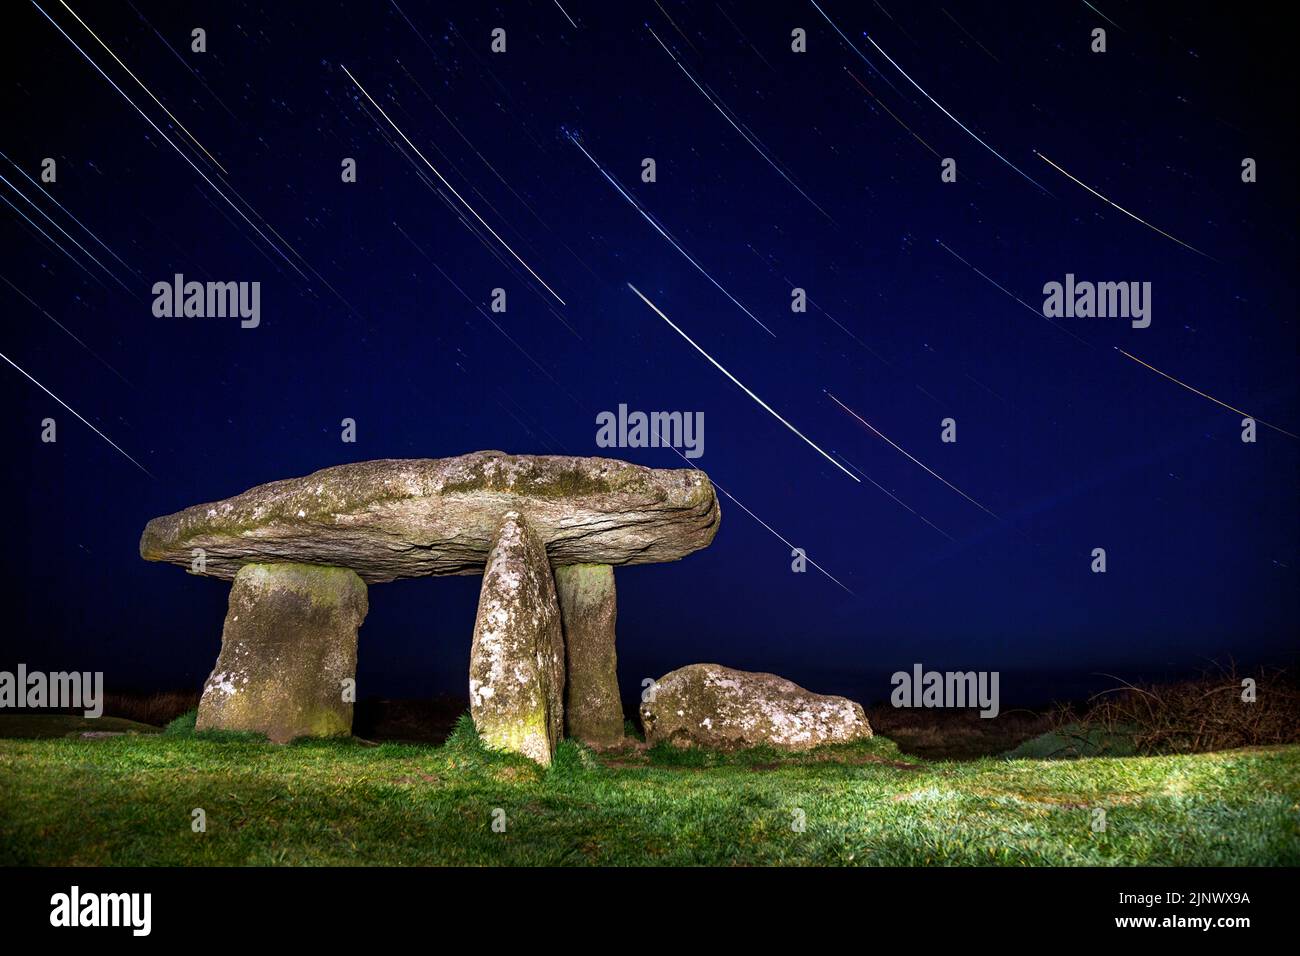 Lanyon Quoit; Star Trails at Night; Cornwall; UK Stock Photo